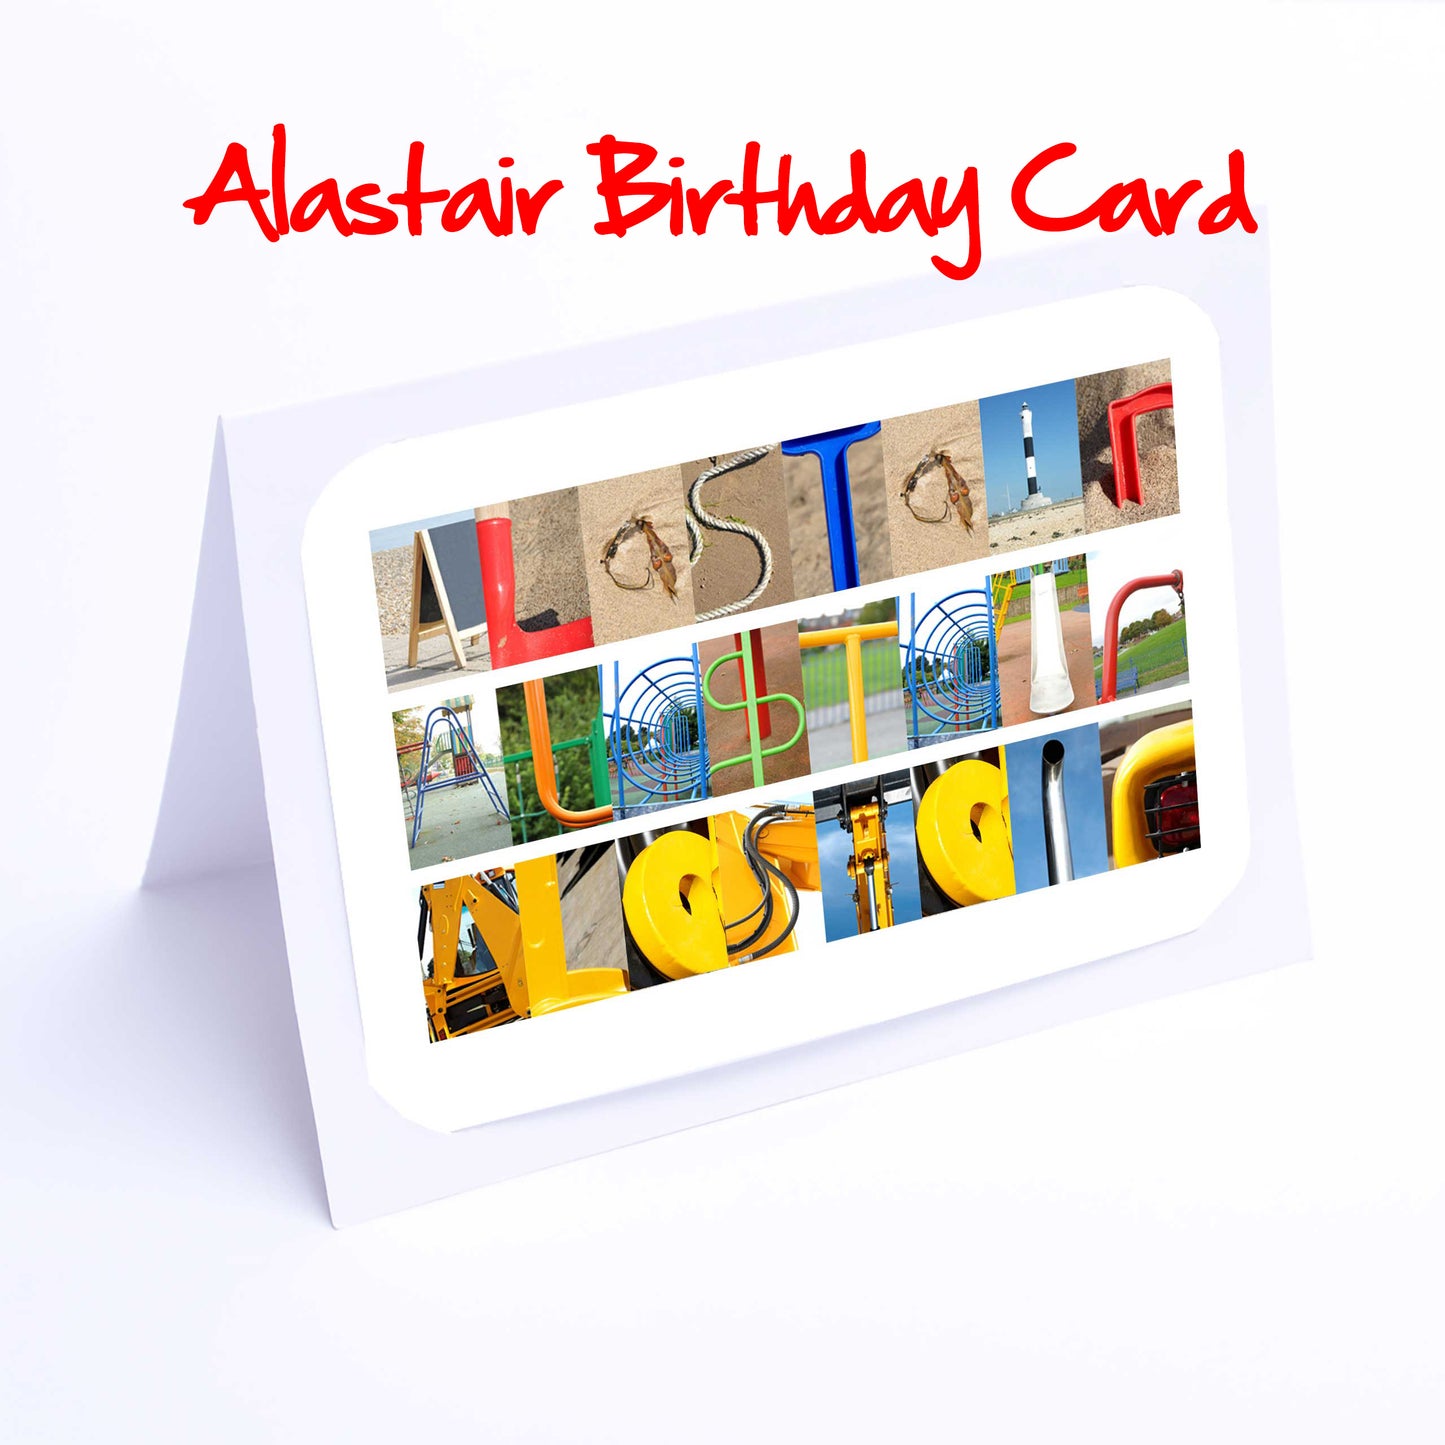 Aa - Al Boys Personalised Card Aaron, Adam, Adrian, Aidan, Alastair, Albert, Alec, Aled, Alex Any Name Any name - Boys Birthday Cards